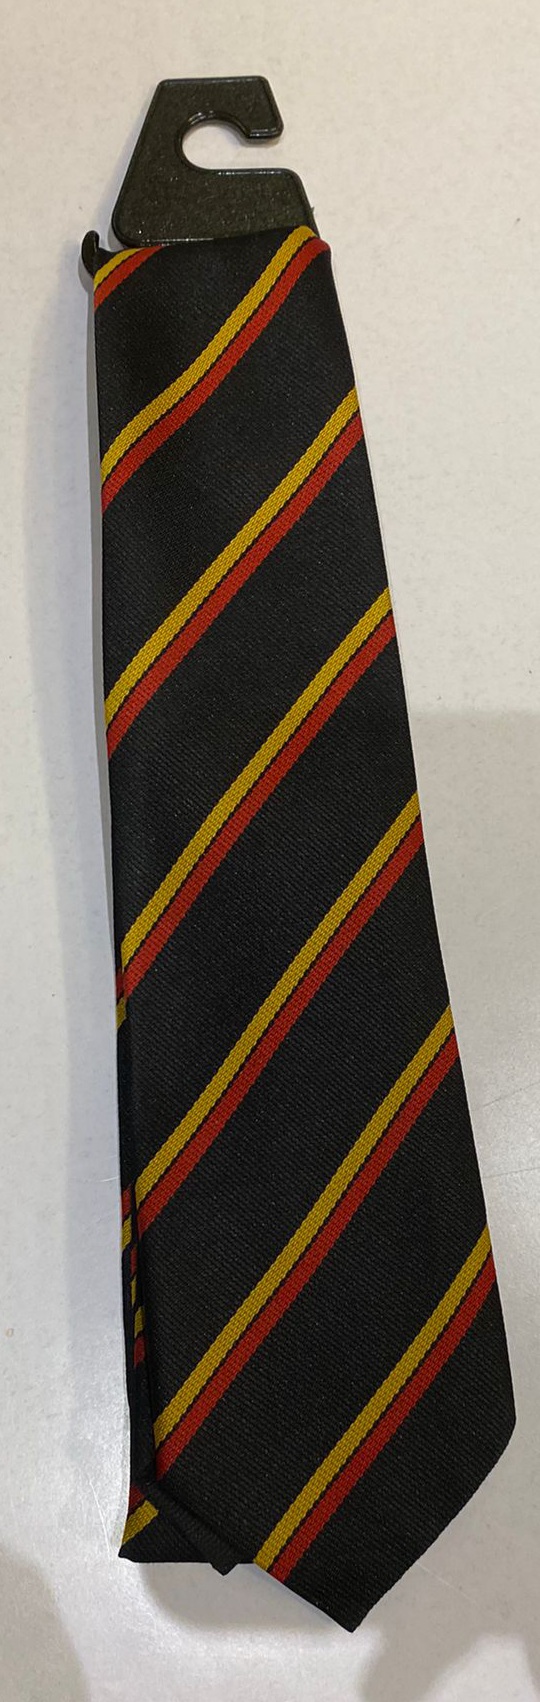 St. Hilary's Primary School Tie (Standard)